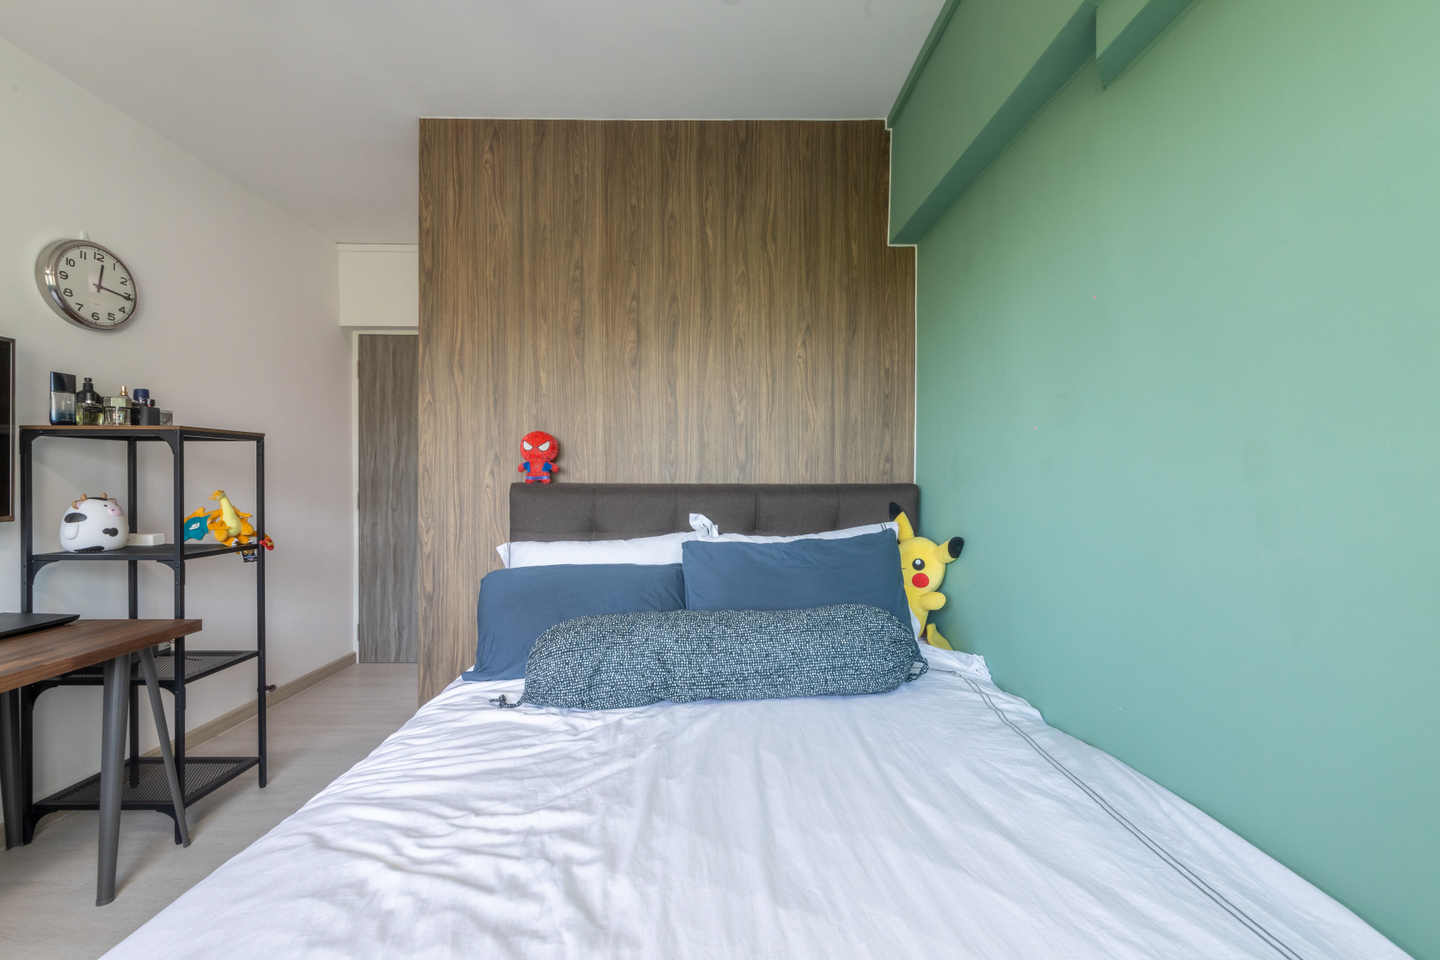 Compact Bedroom With Minimalist Interior Design - Livspace